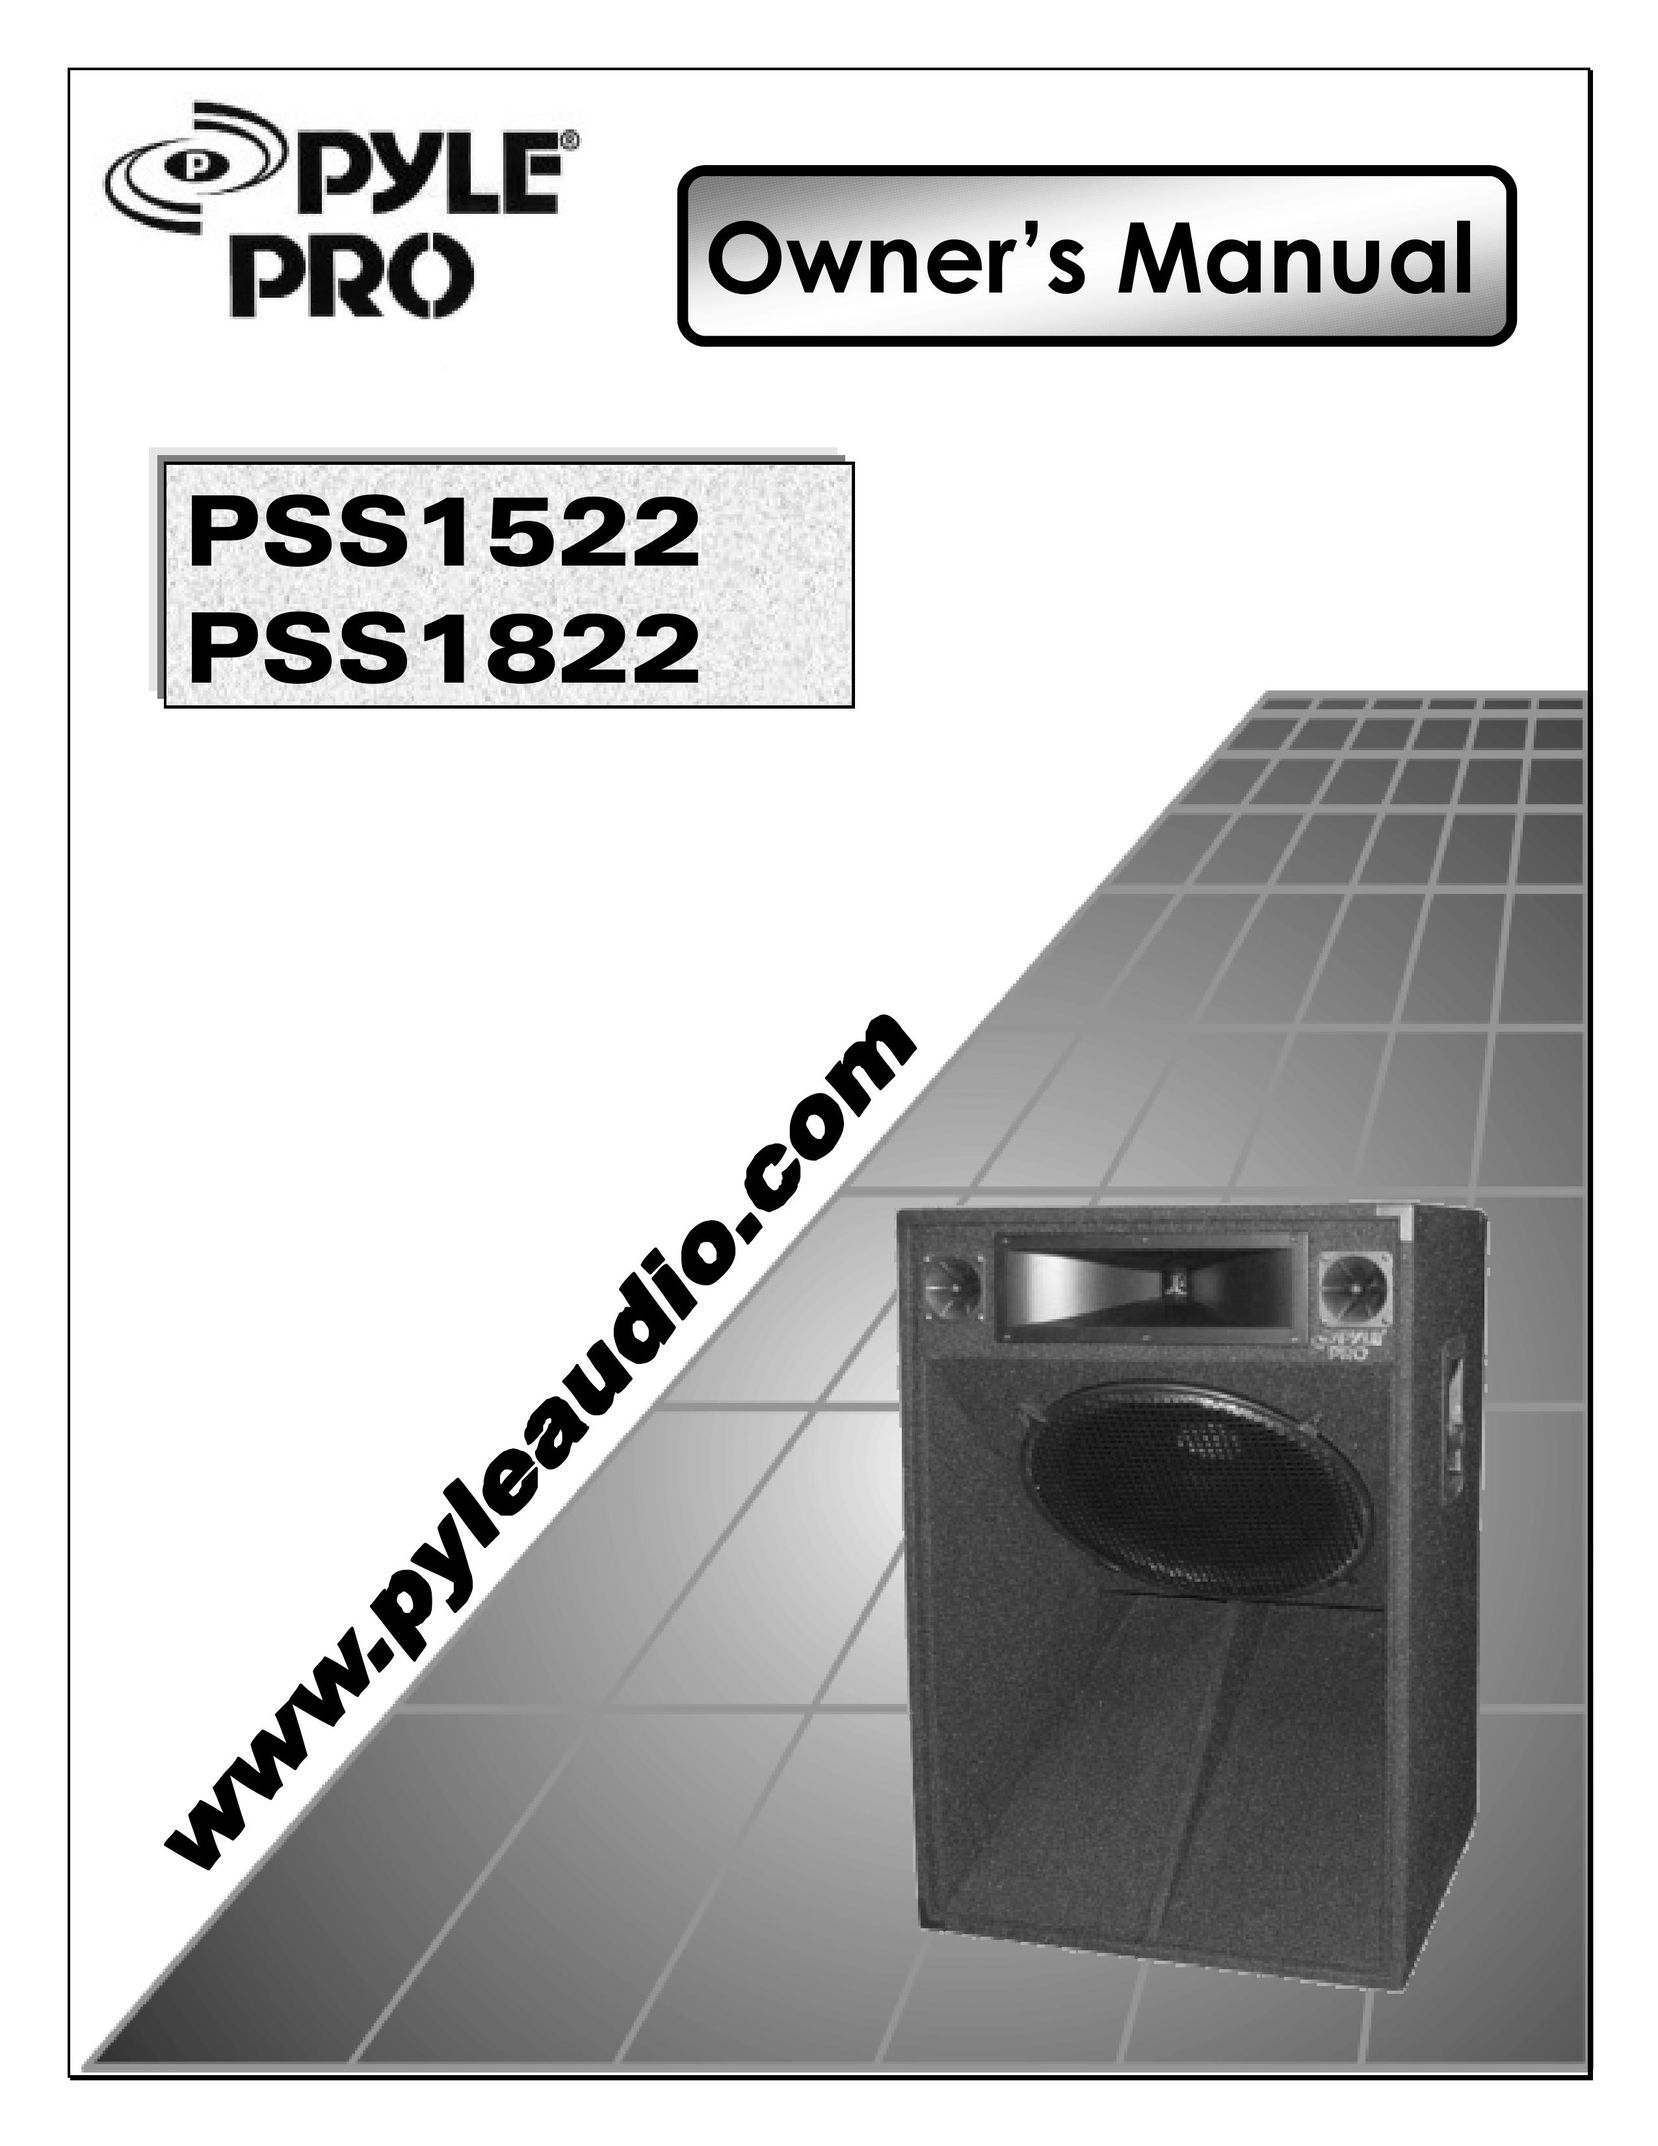 PYLE Audio PSS1522 Portable Speaker User Manual